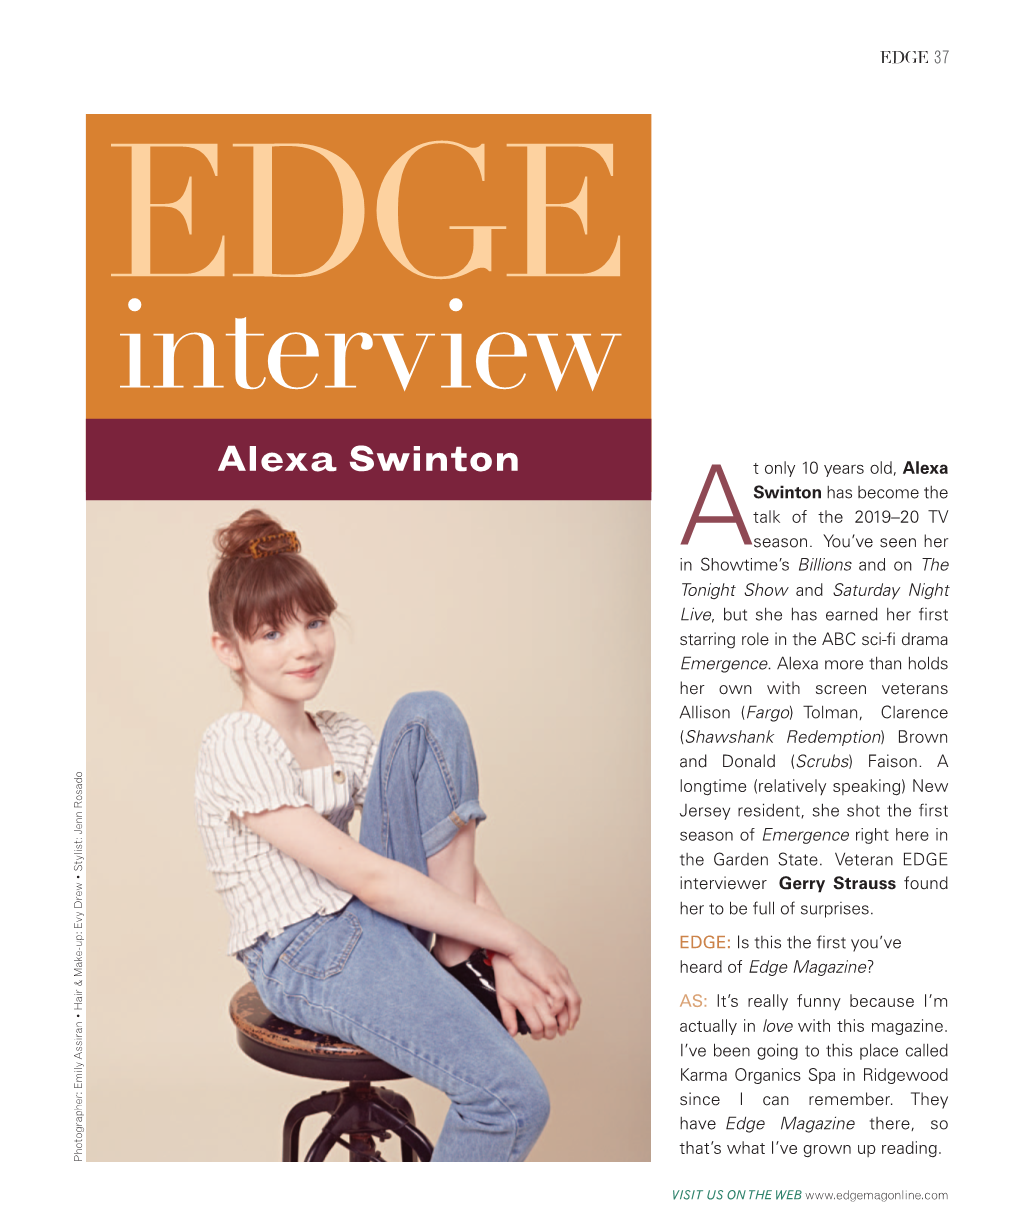 Alexa Swinton T Only 10 Years Old, Alexa Swinton Has Become the Talk of the 2019–20 TV Aseason